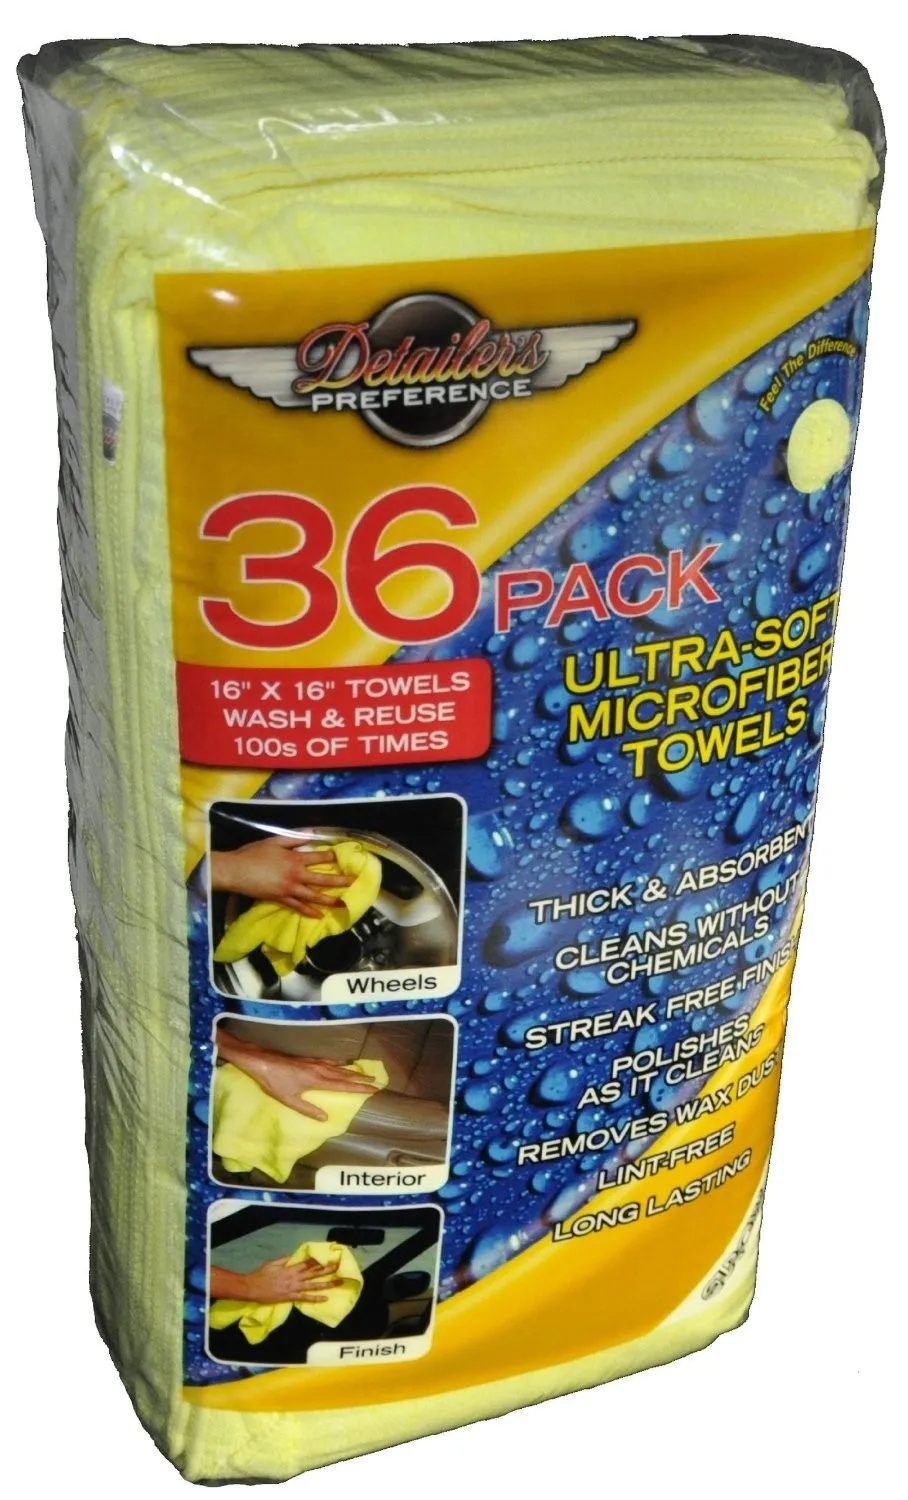 36 pack ultra-soft microfiber towels